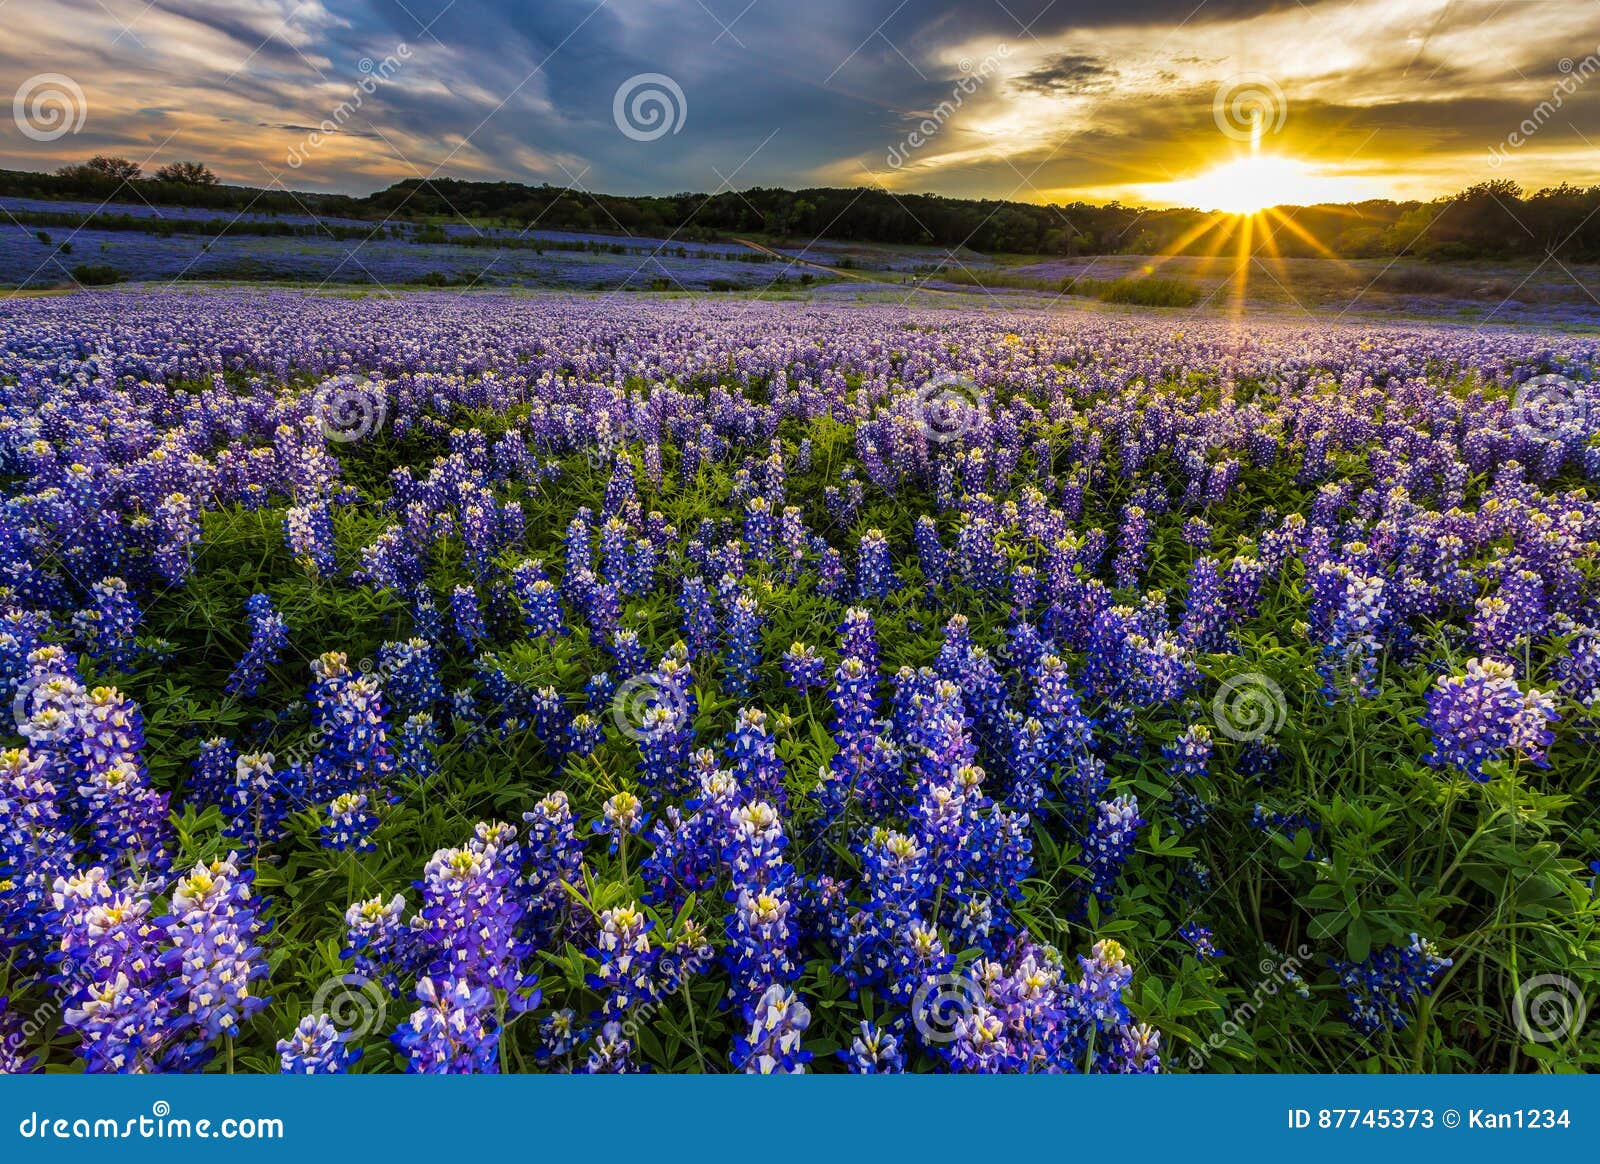 texas bluebonnet field in sunset at muleshoe bend recreation area